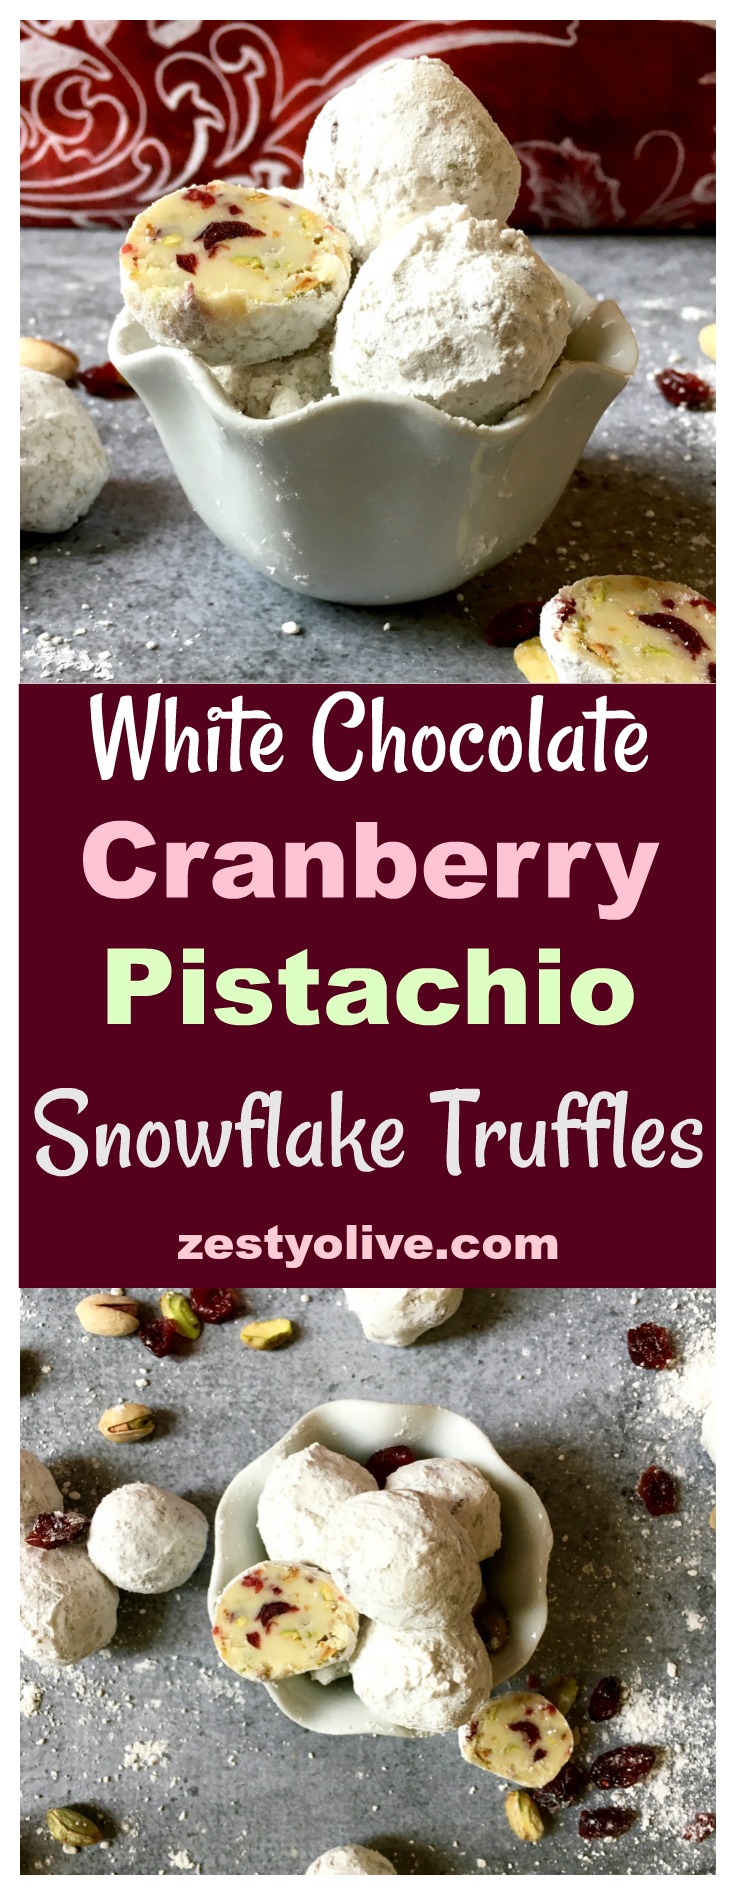 White Chocolate Cranberry Pistachio Snowflake Truffles